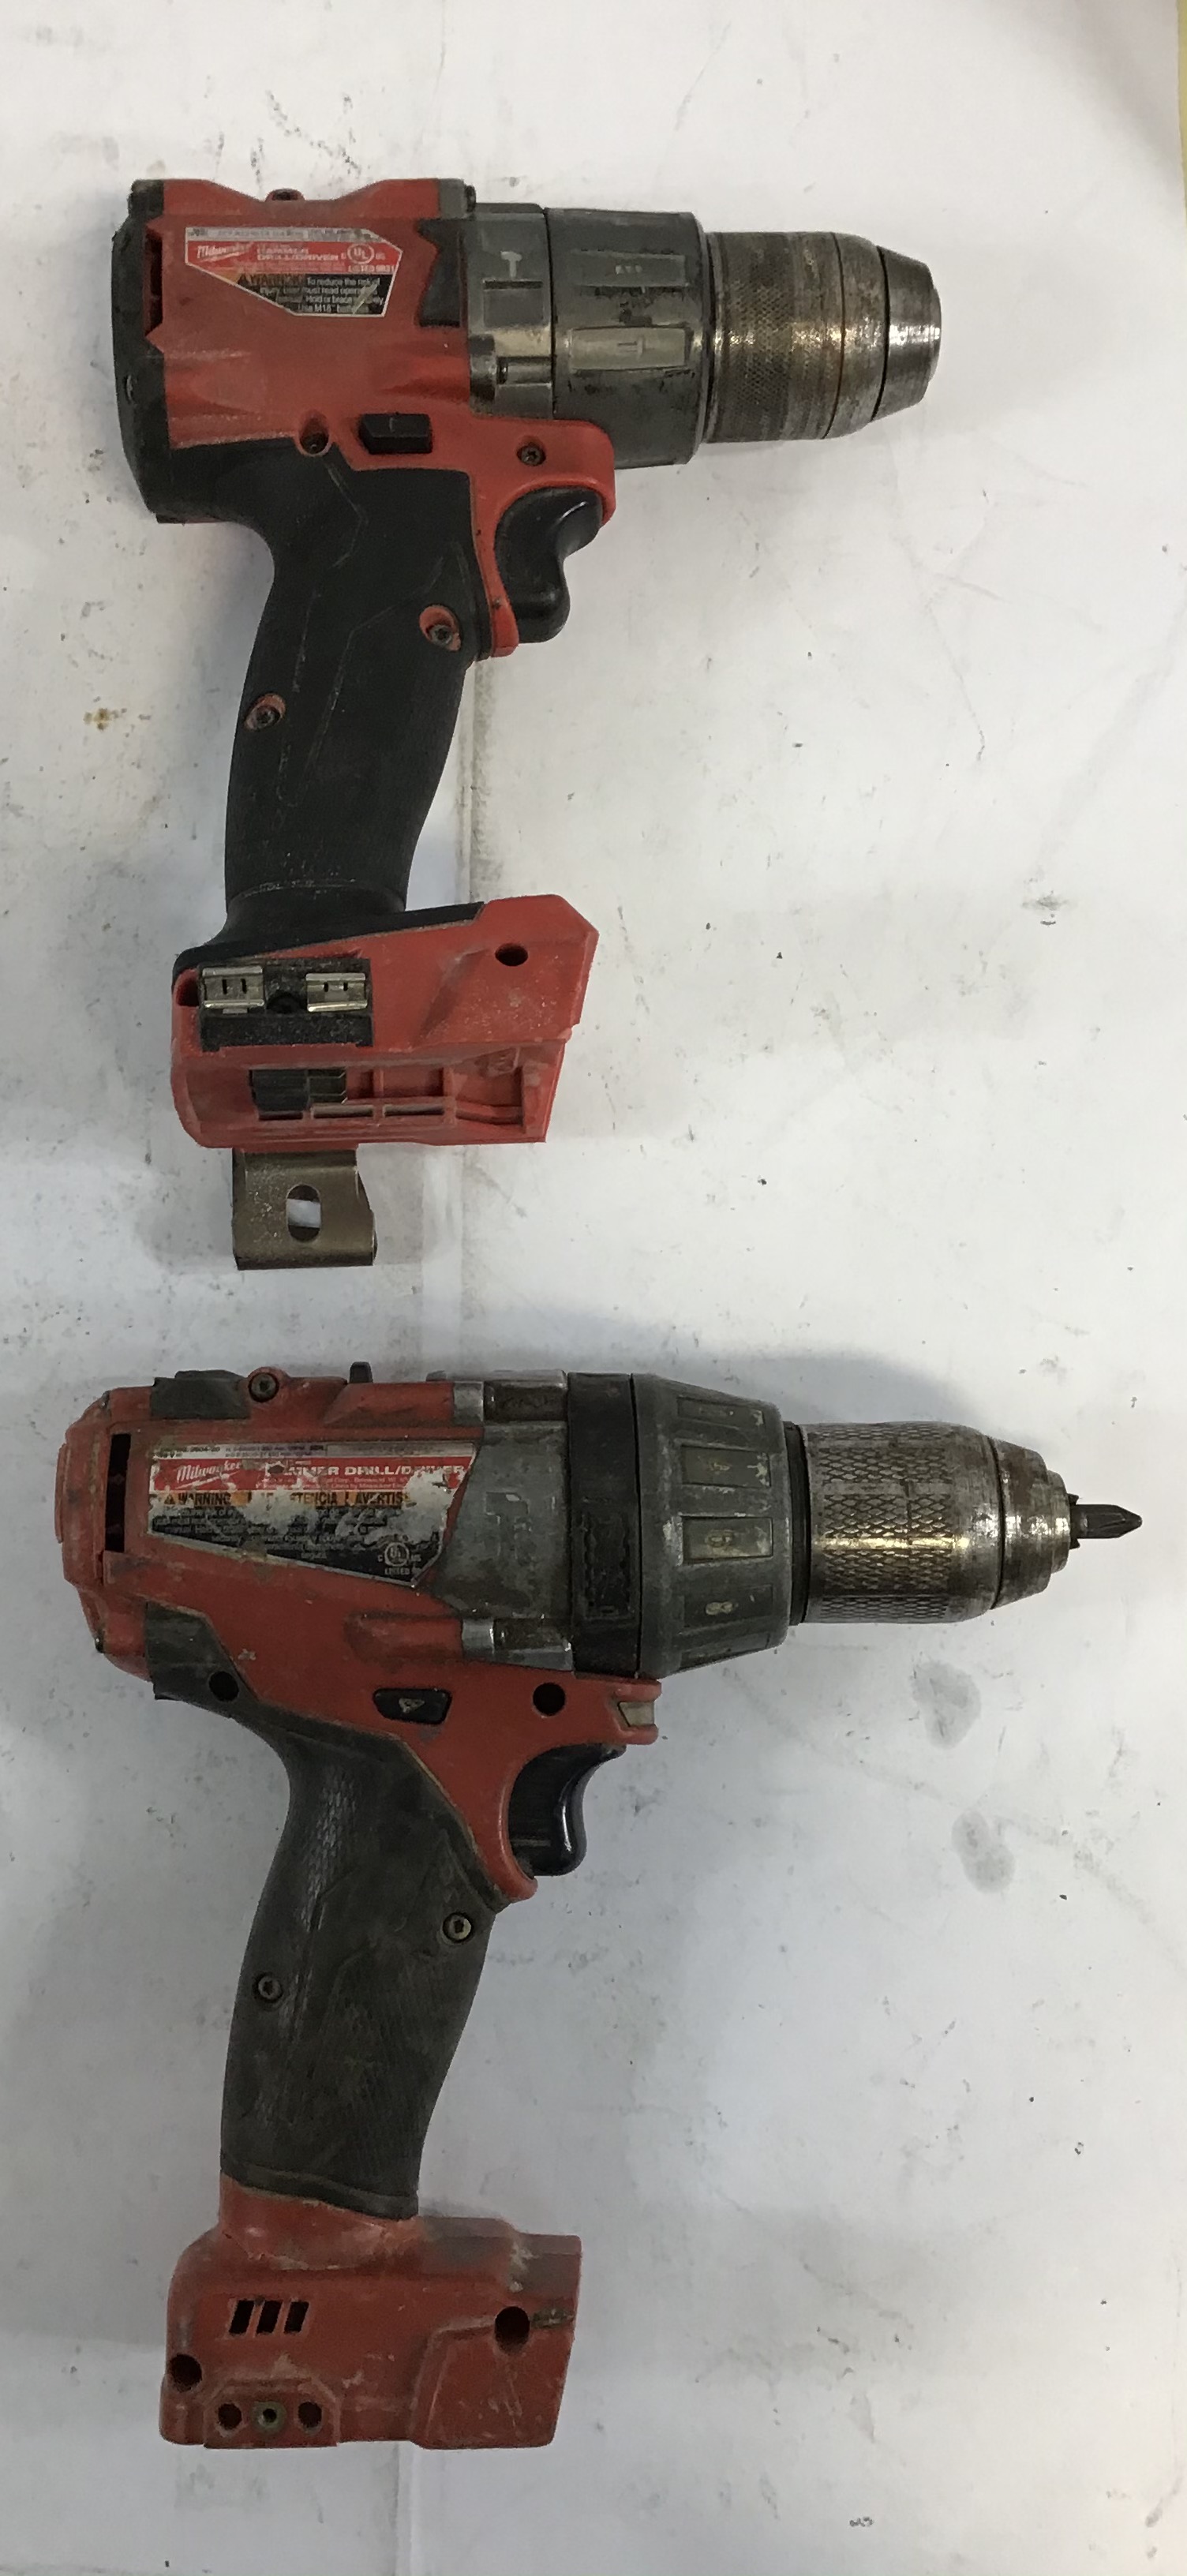 milwaukee hammer drill instructions